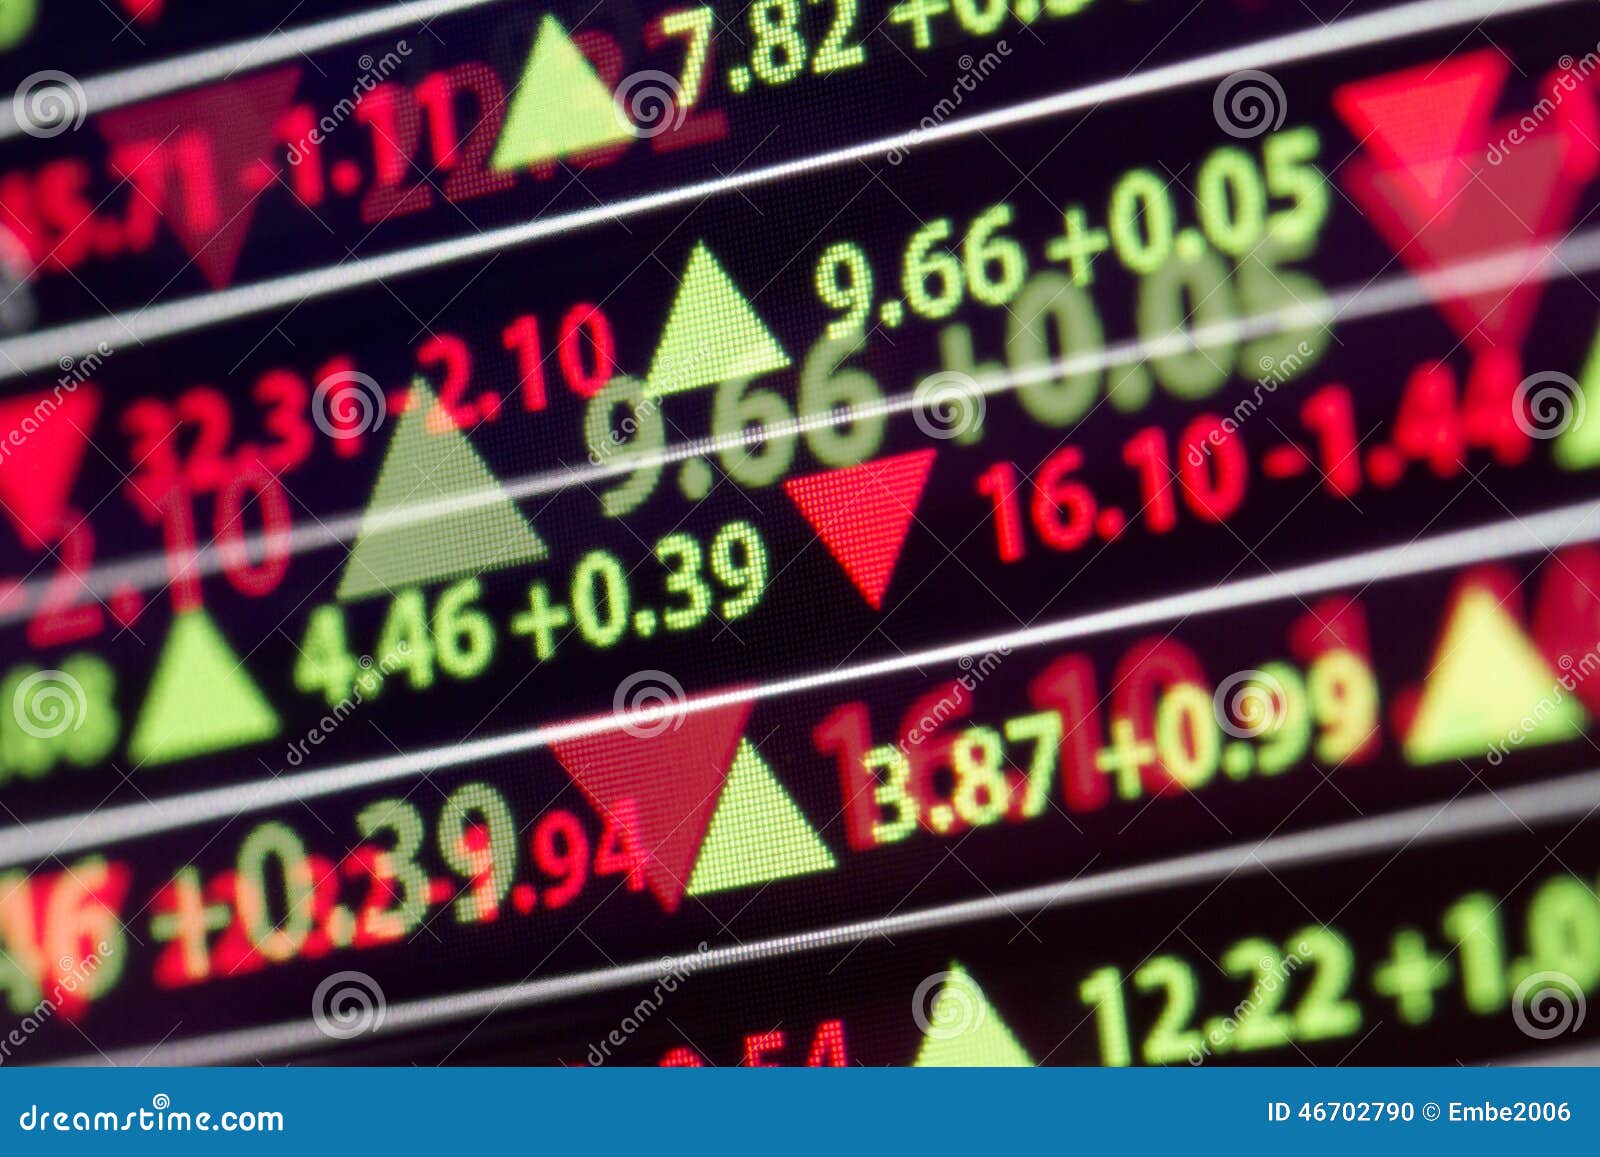 financial stock market price